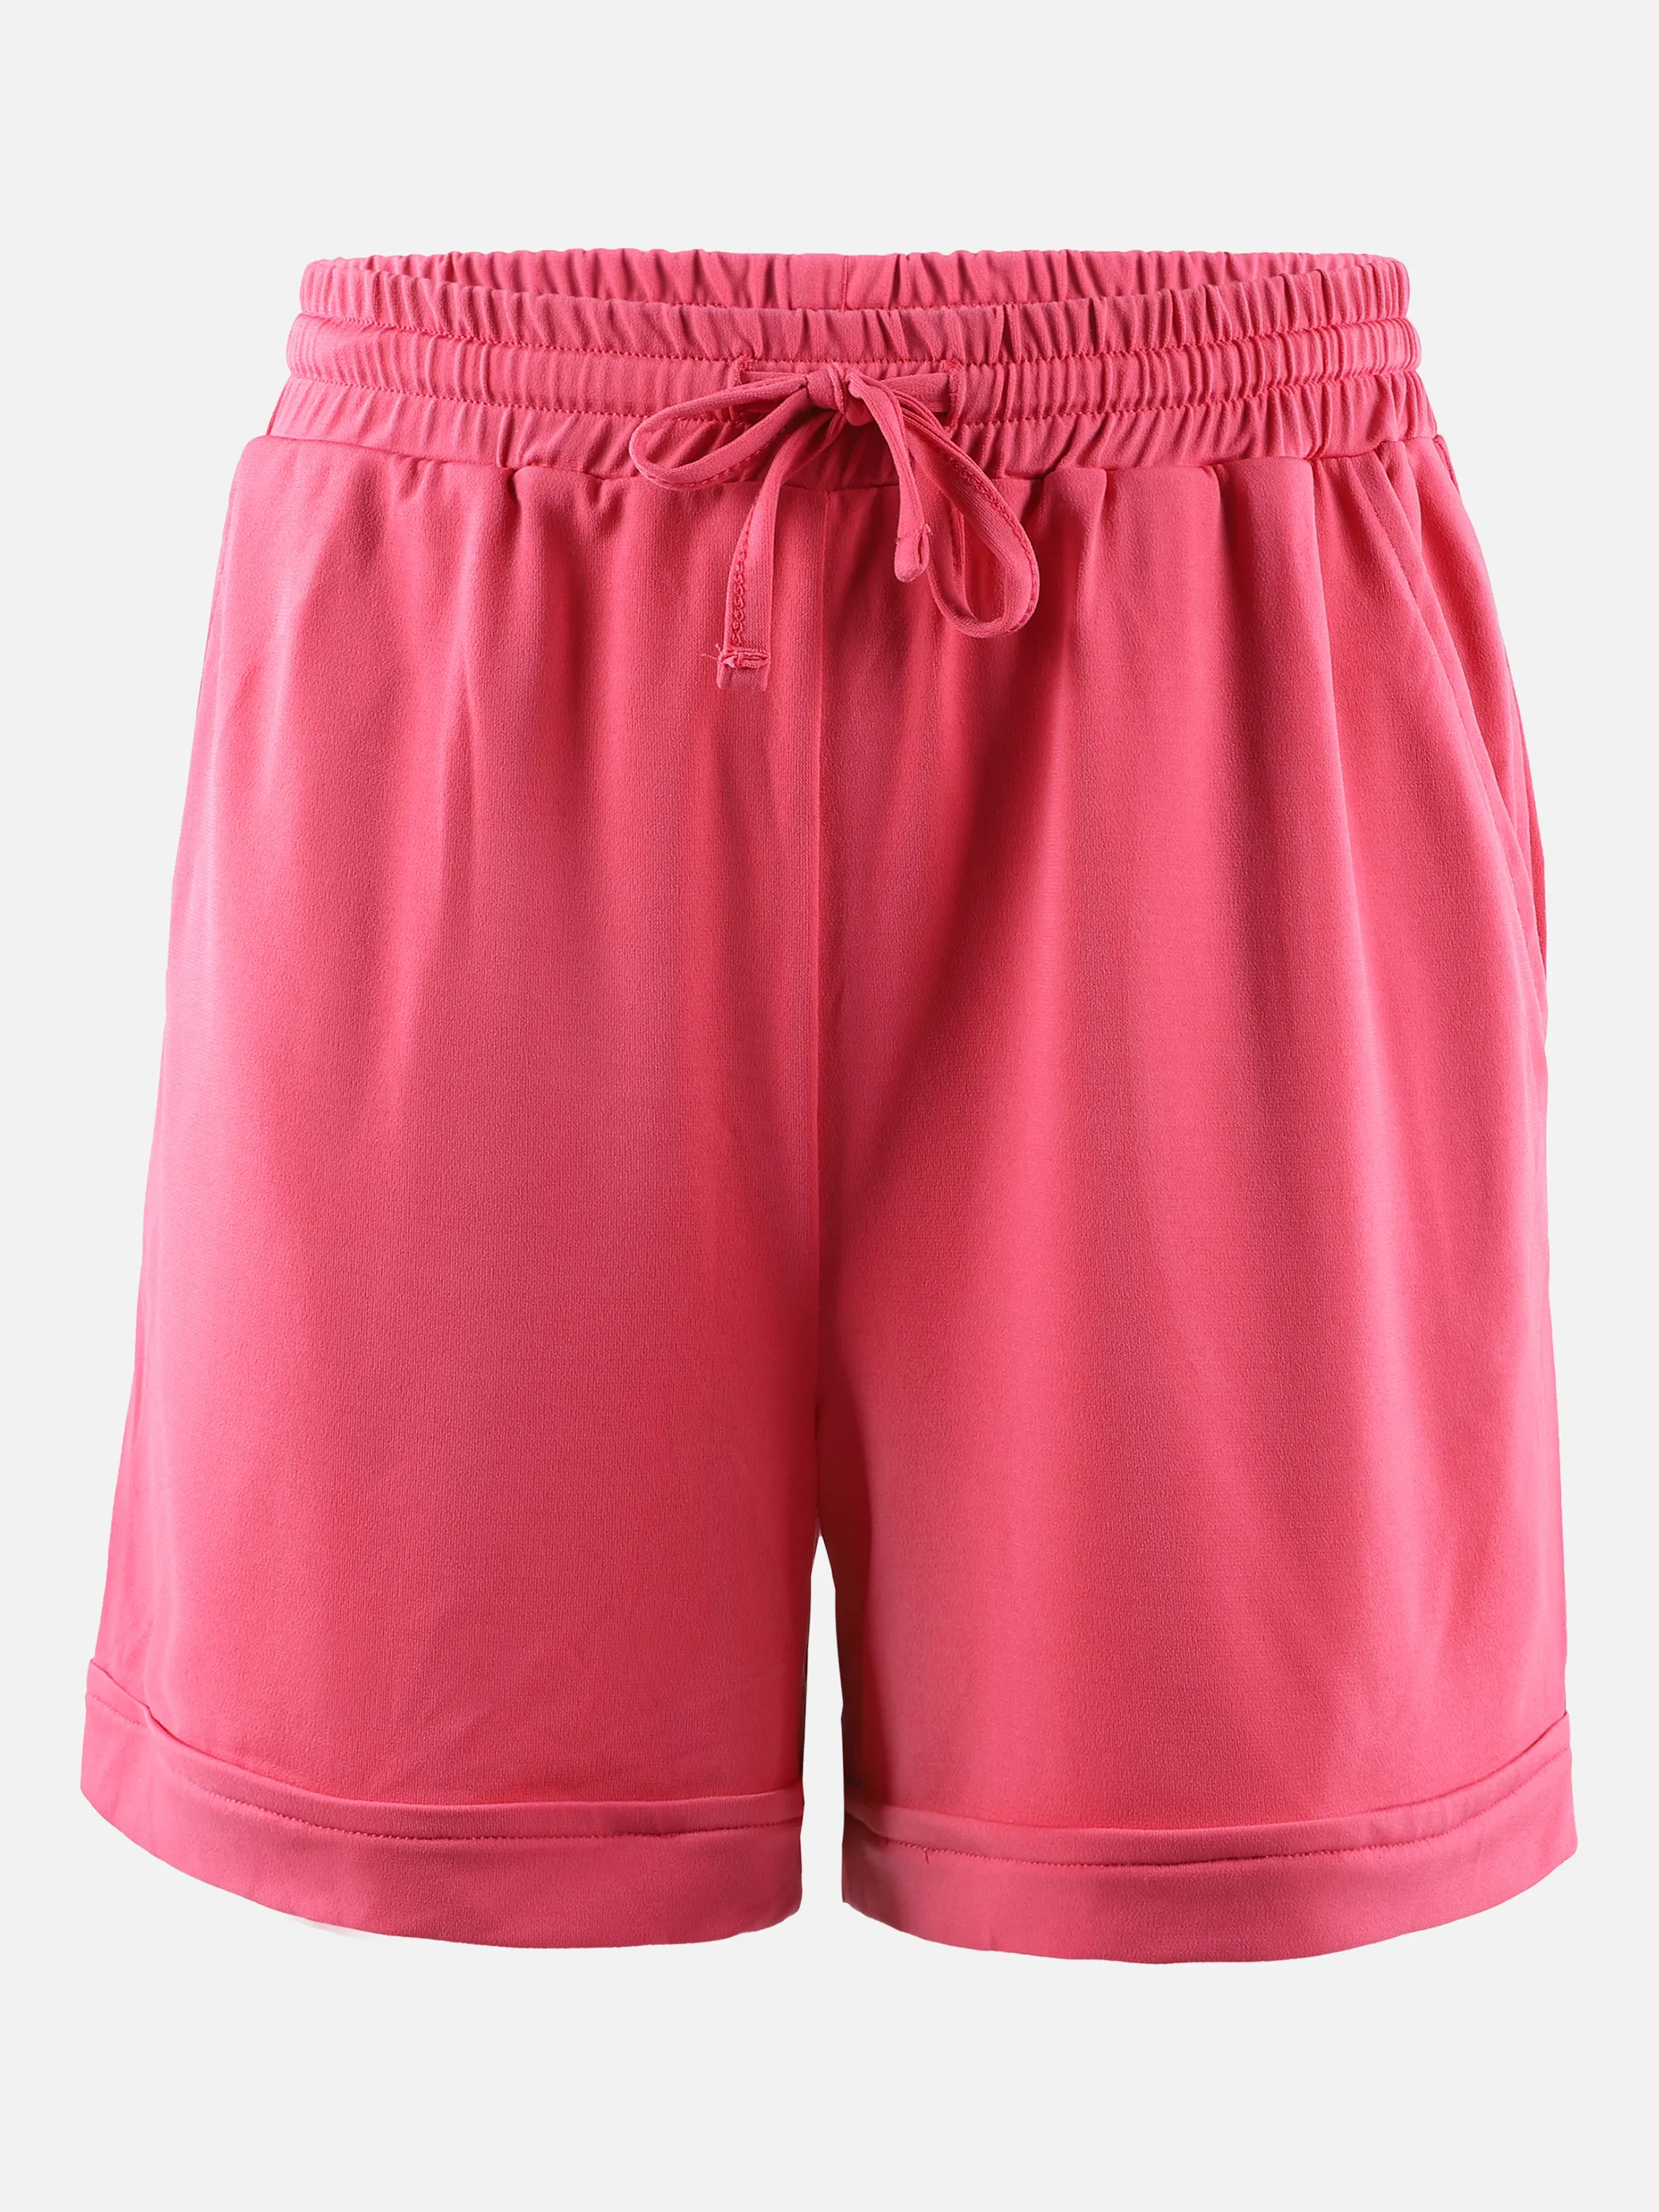 Stop + Go JM Flatter Shorts in pink/schwarz/blau,schwarz AOP Pink 881691 PINK 1